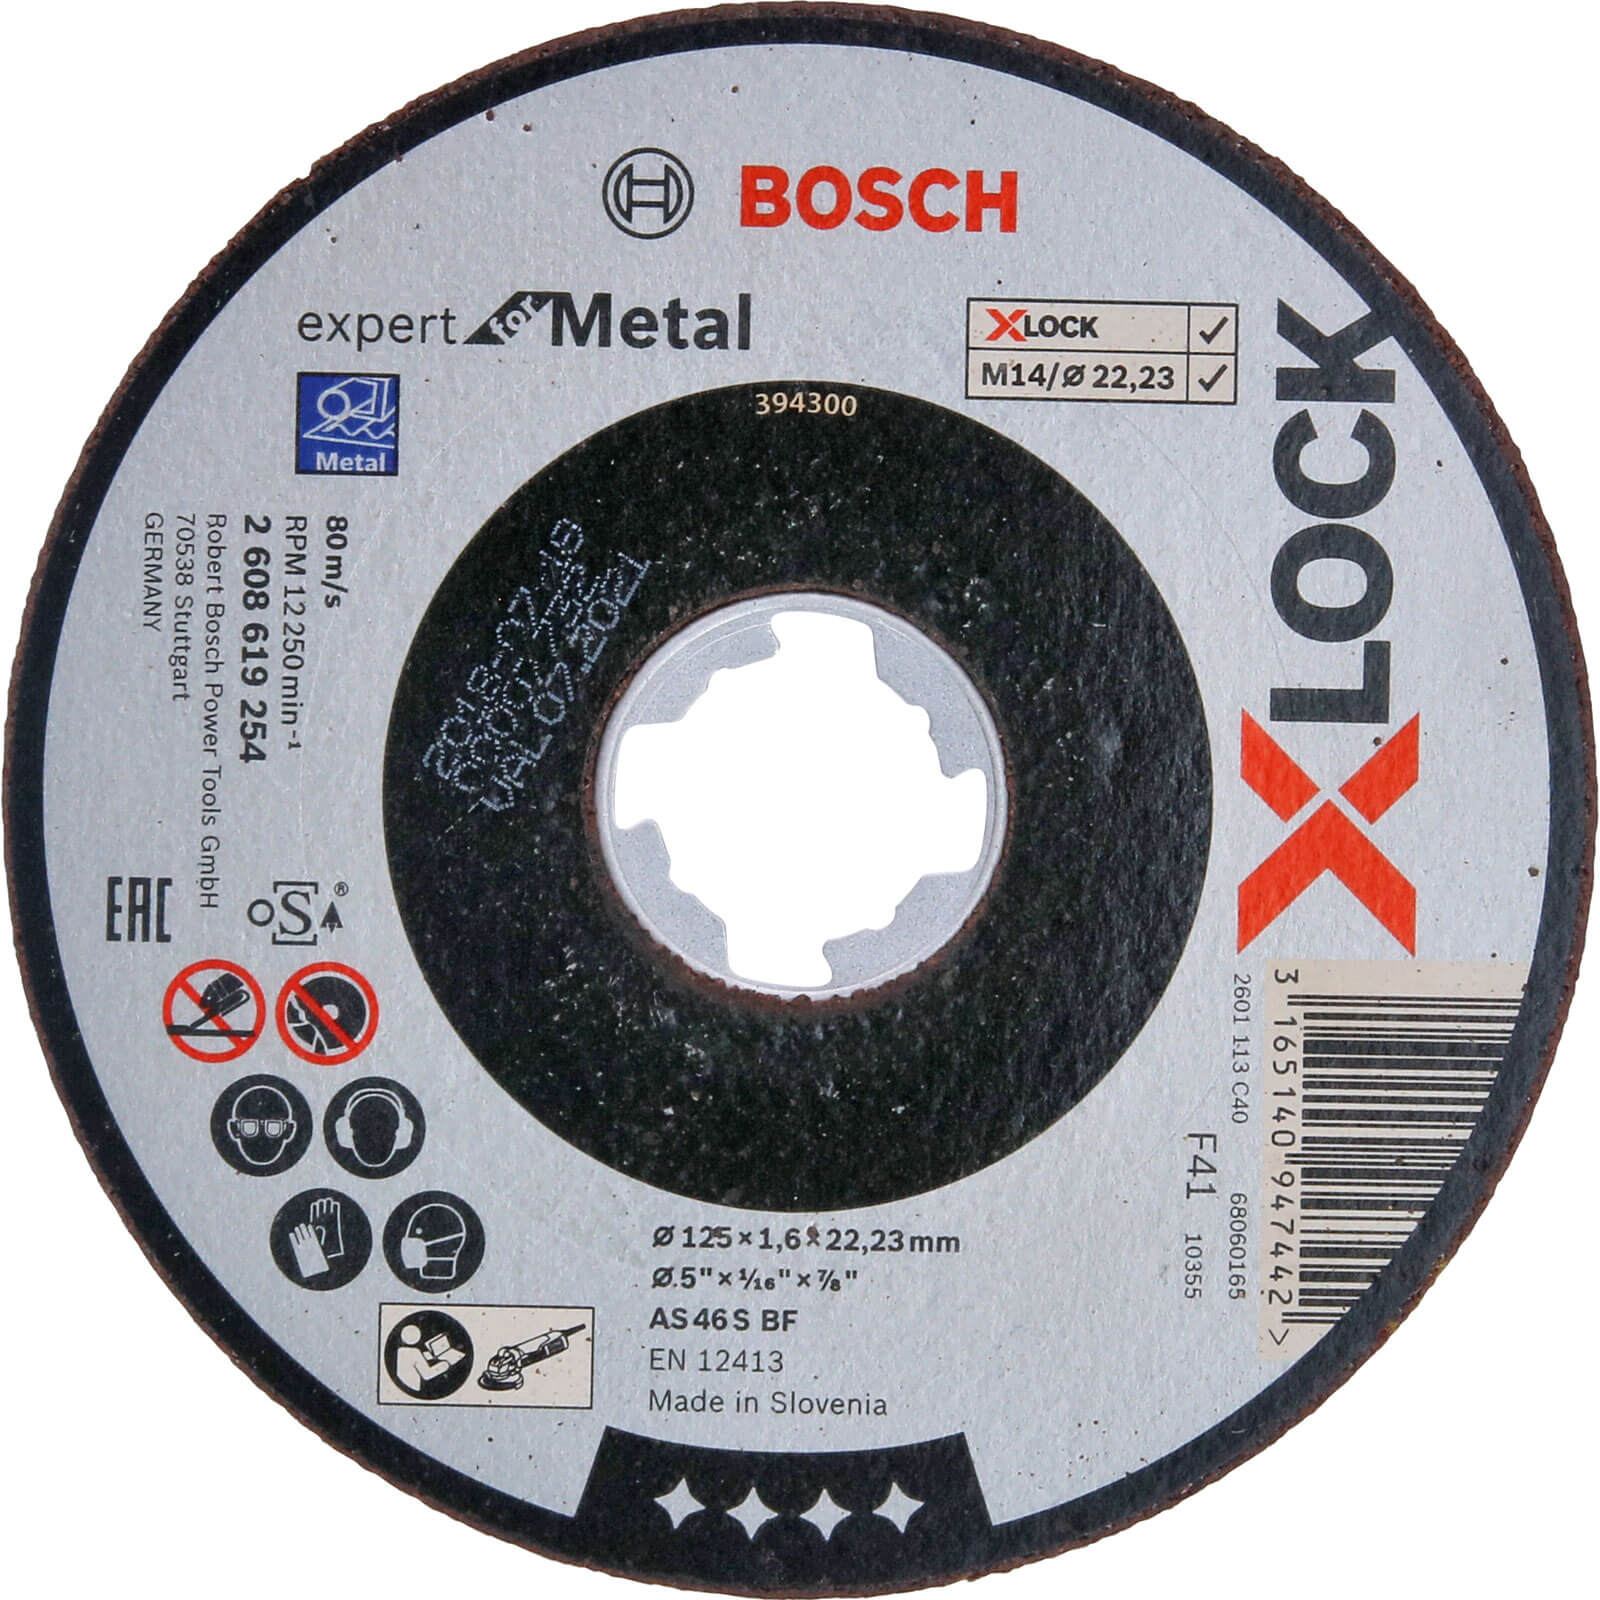 Image of Bosch Expert X Lock Metal Cutting Disc 125mm 1.6mm 22mm